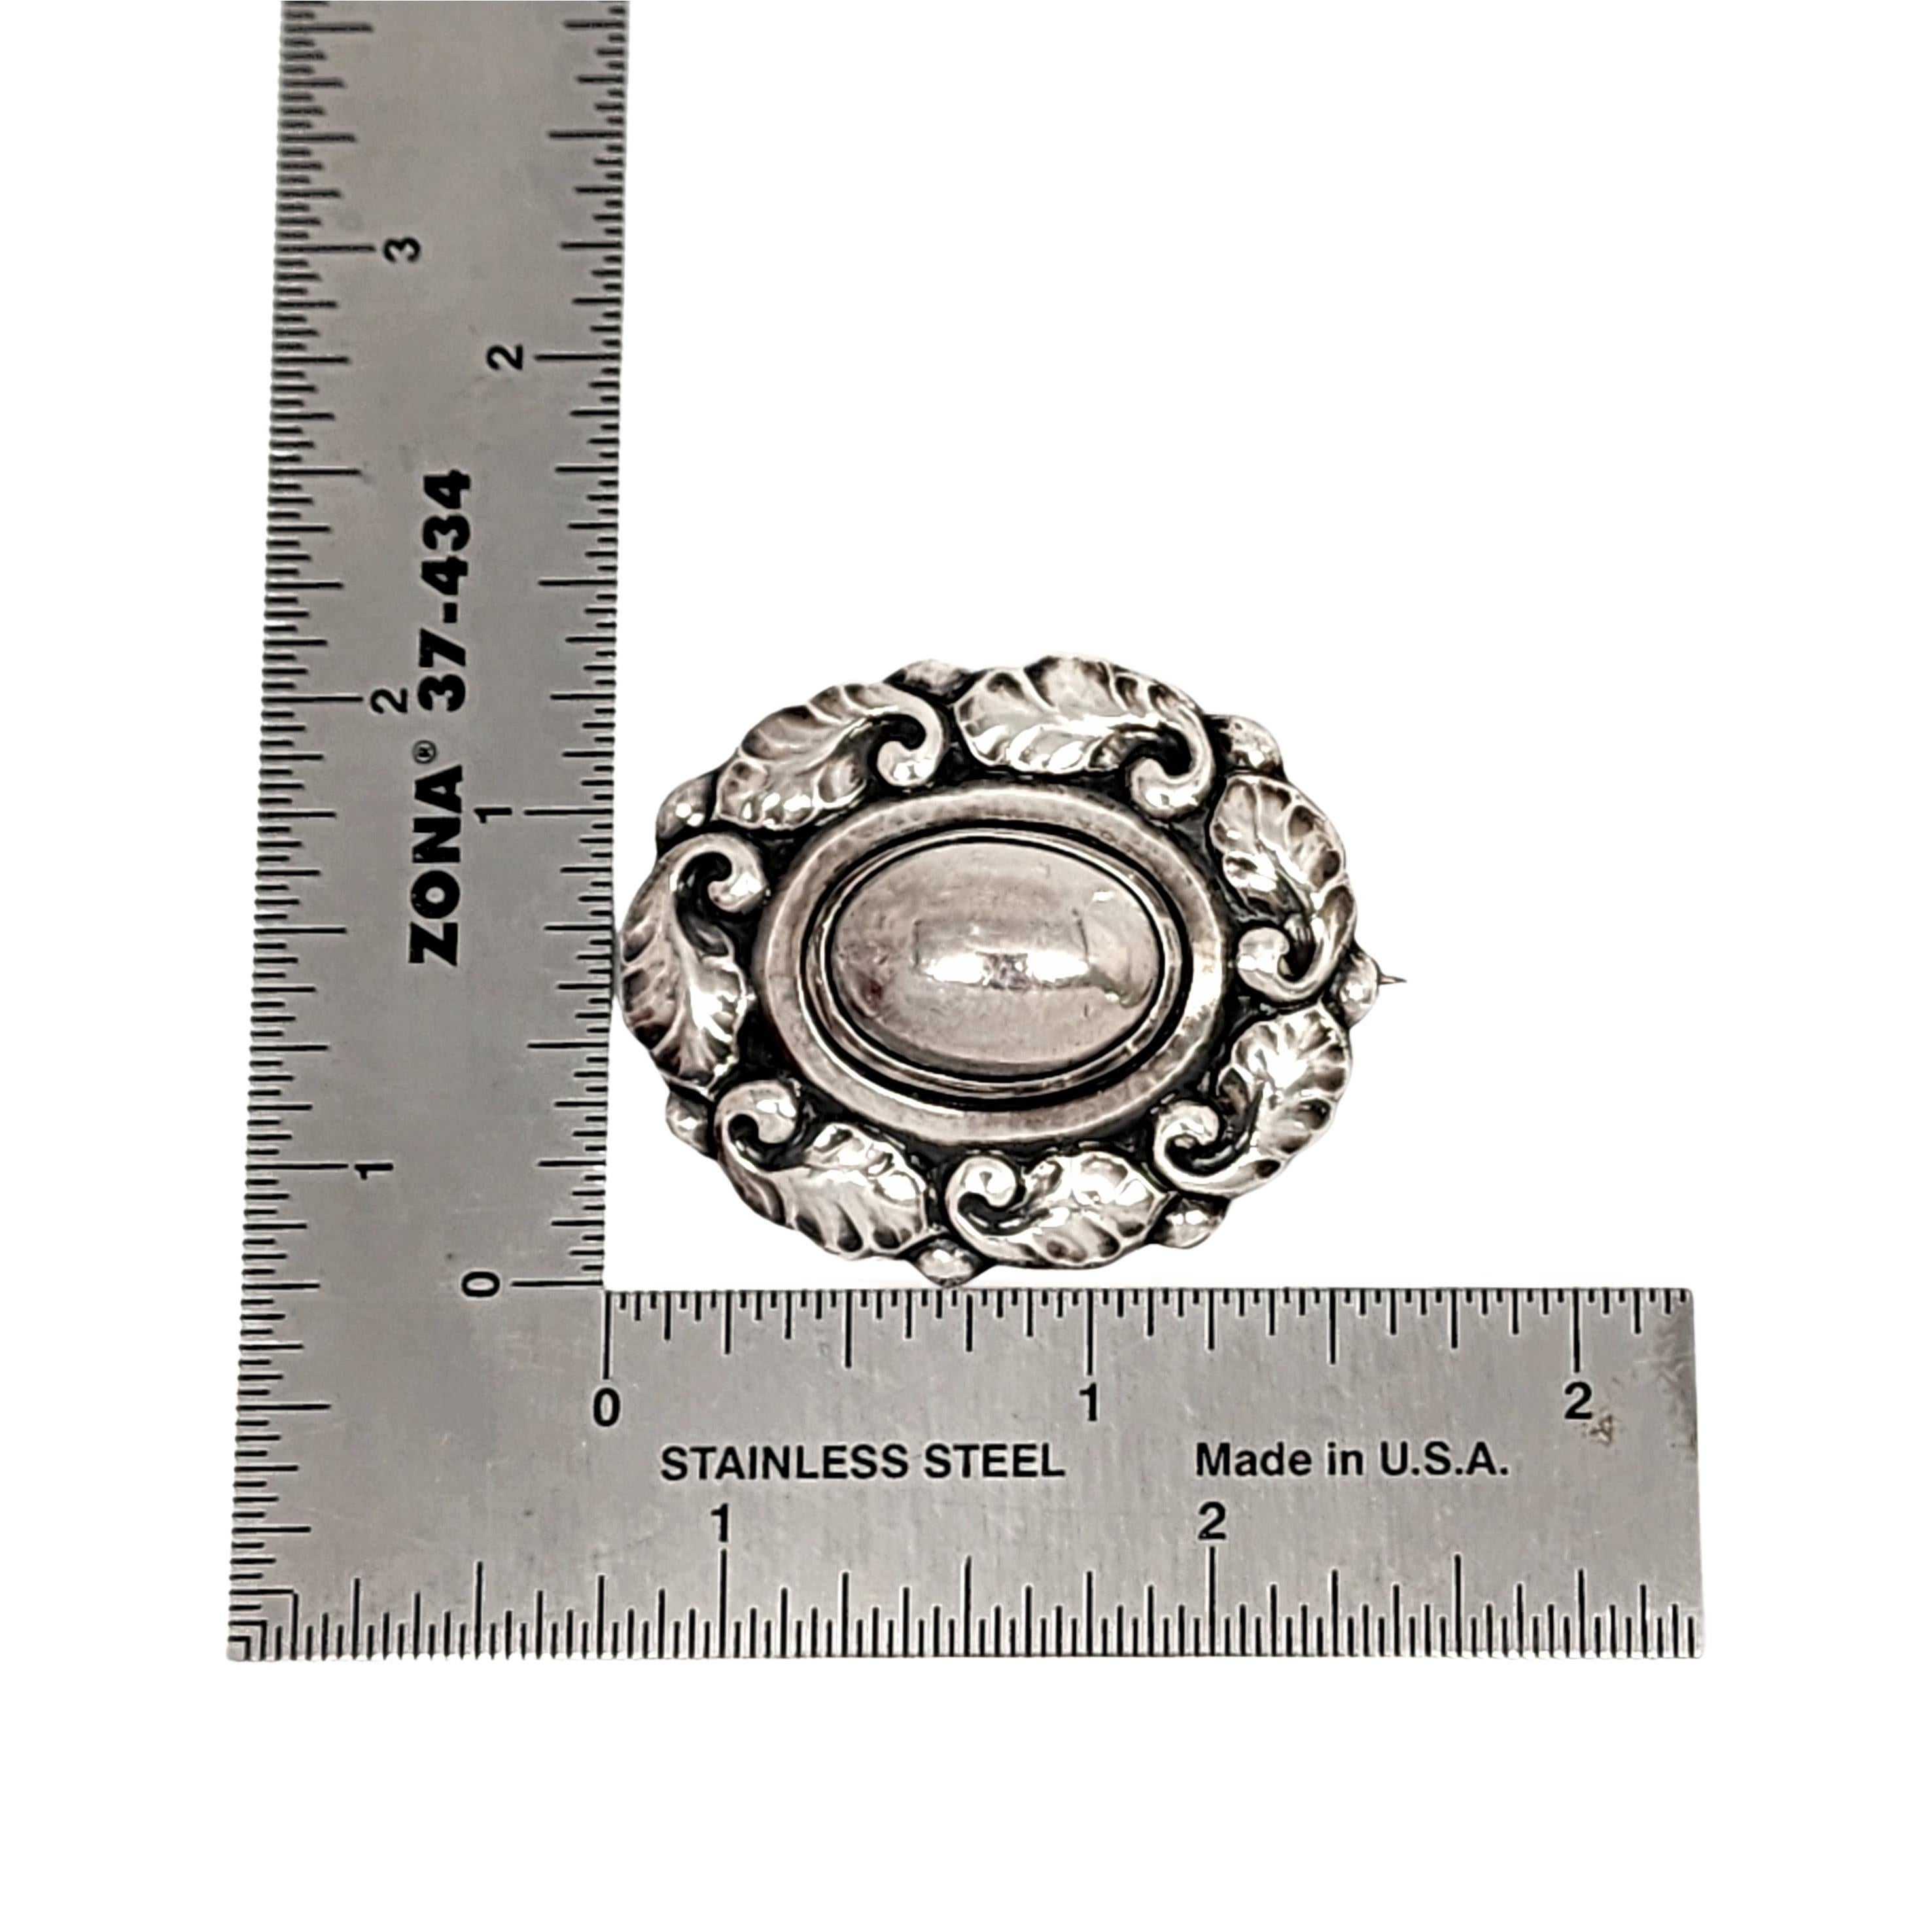 Georg Jensen Denmark Sterling Silver 60 Oval Dome Leaf Pin/Brooch #14682 For Sale 3